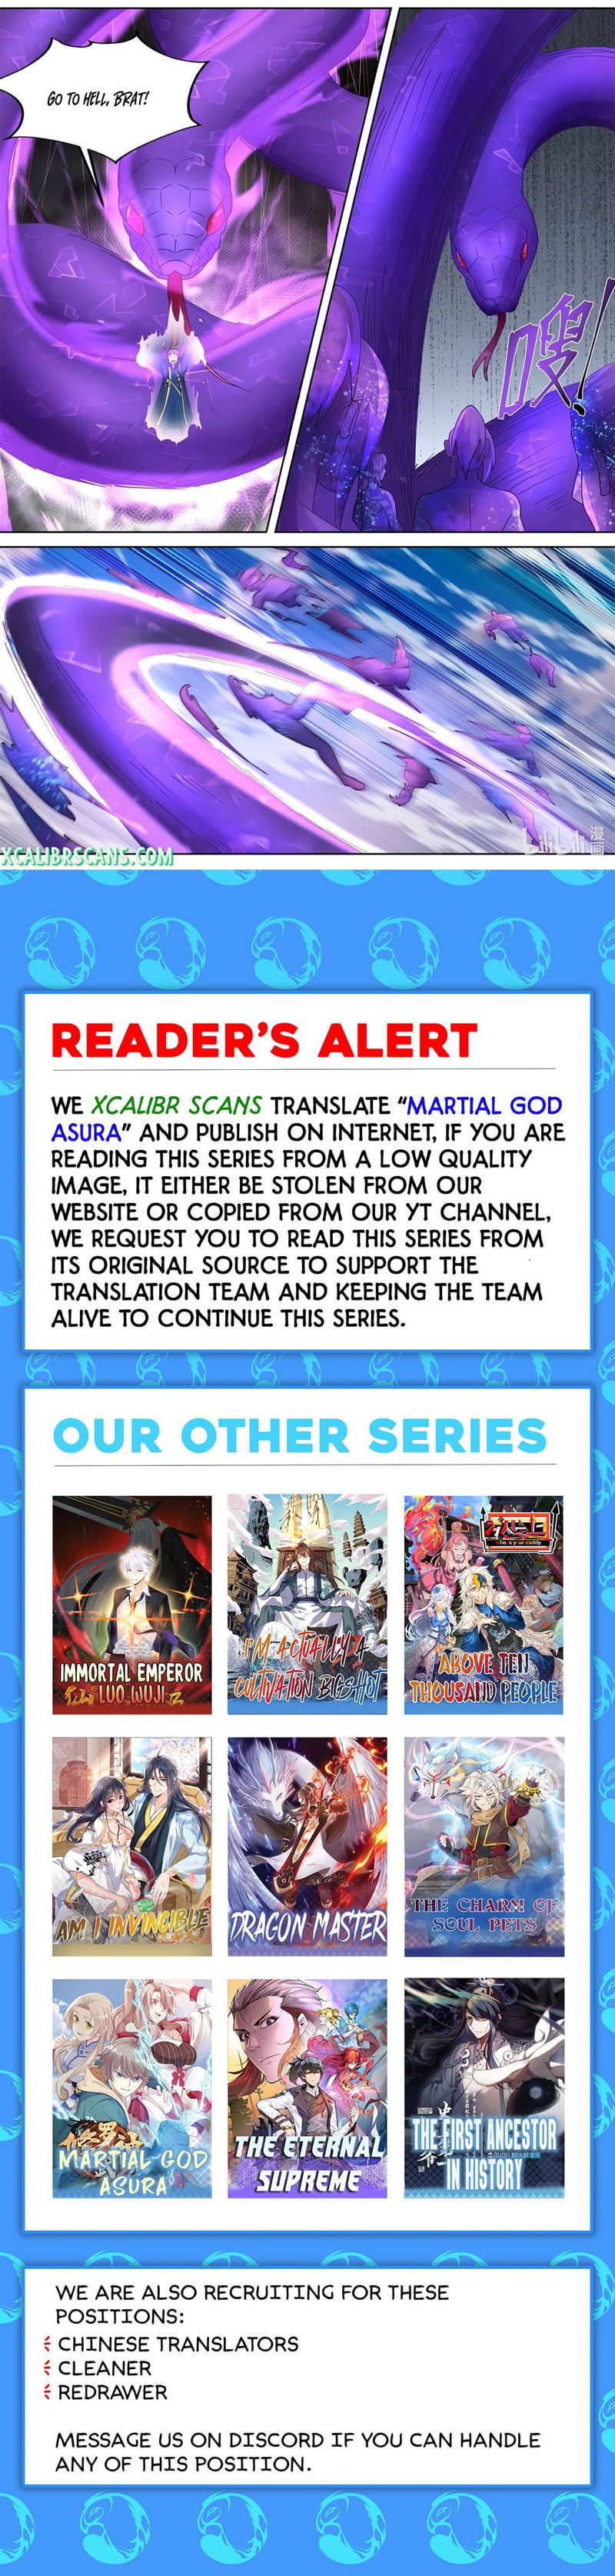 Martial God Asura Chapter 431 page 10